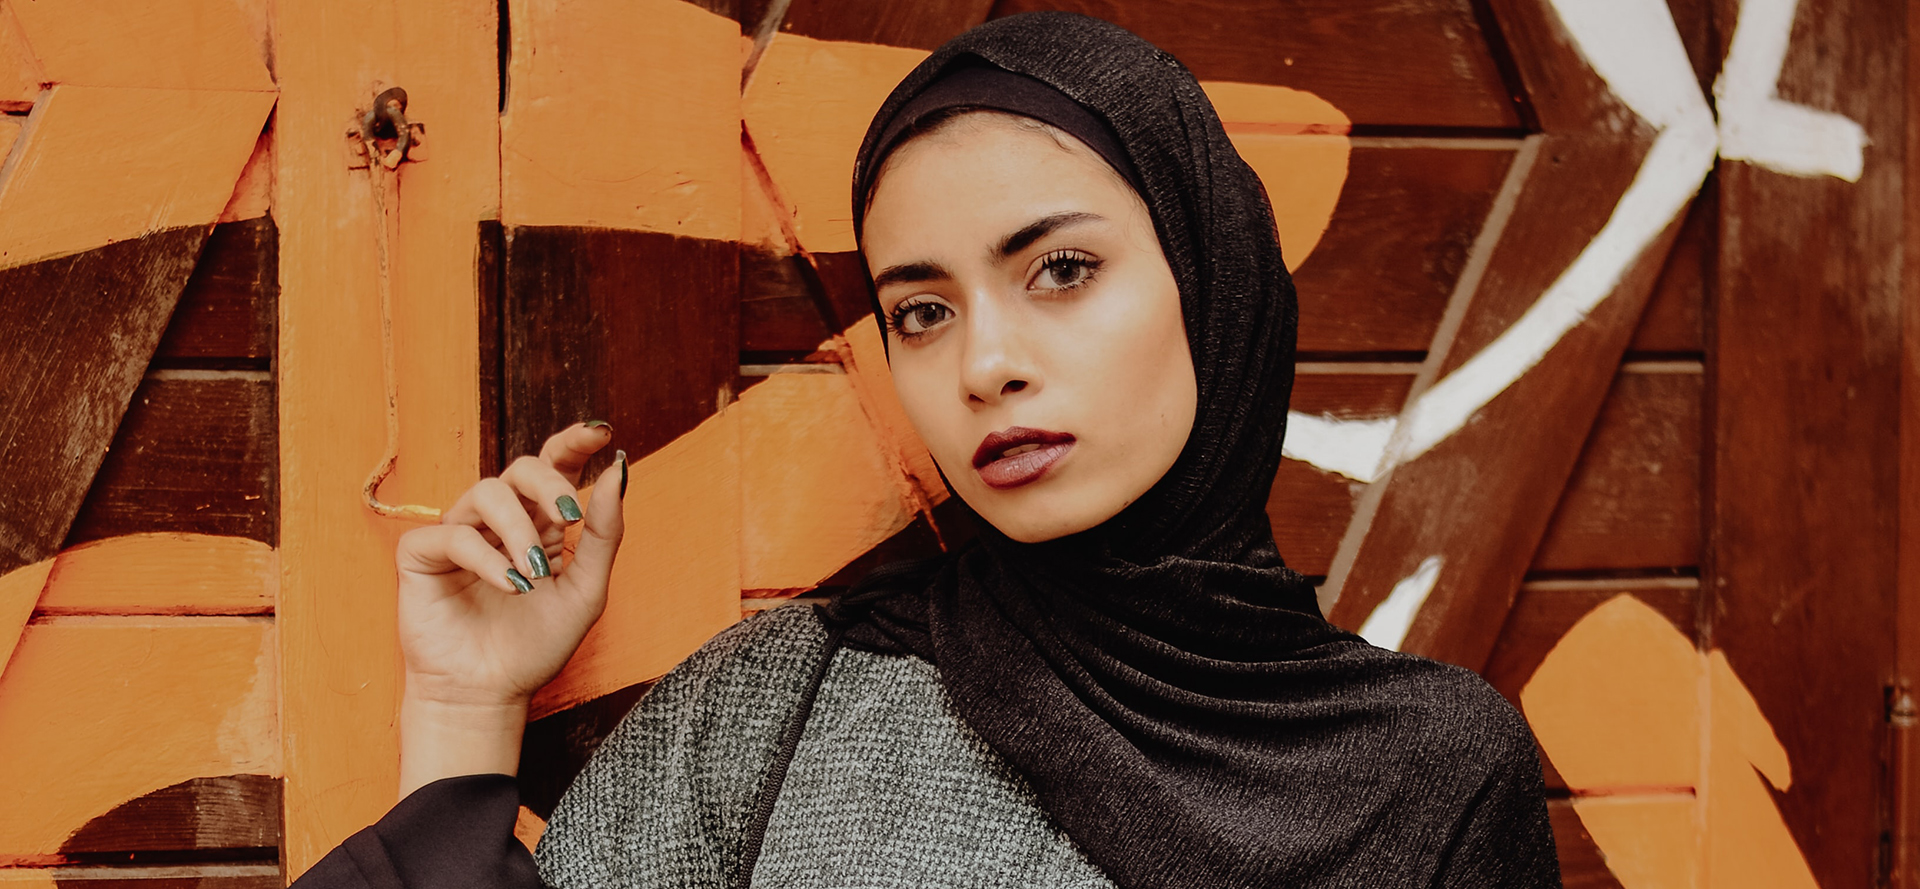 Femme arabe portant un foulard noir.